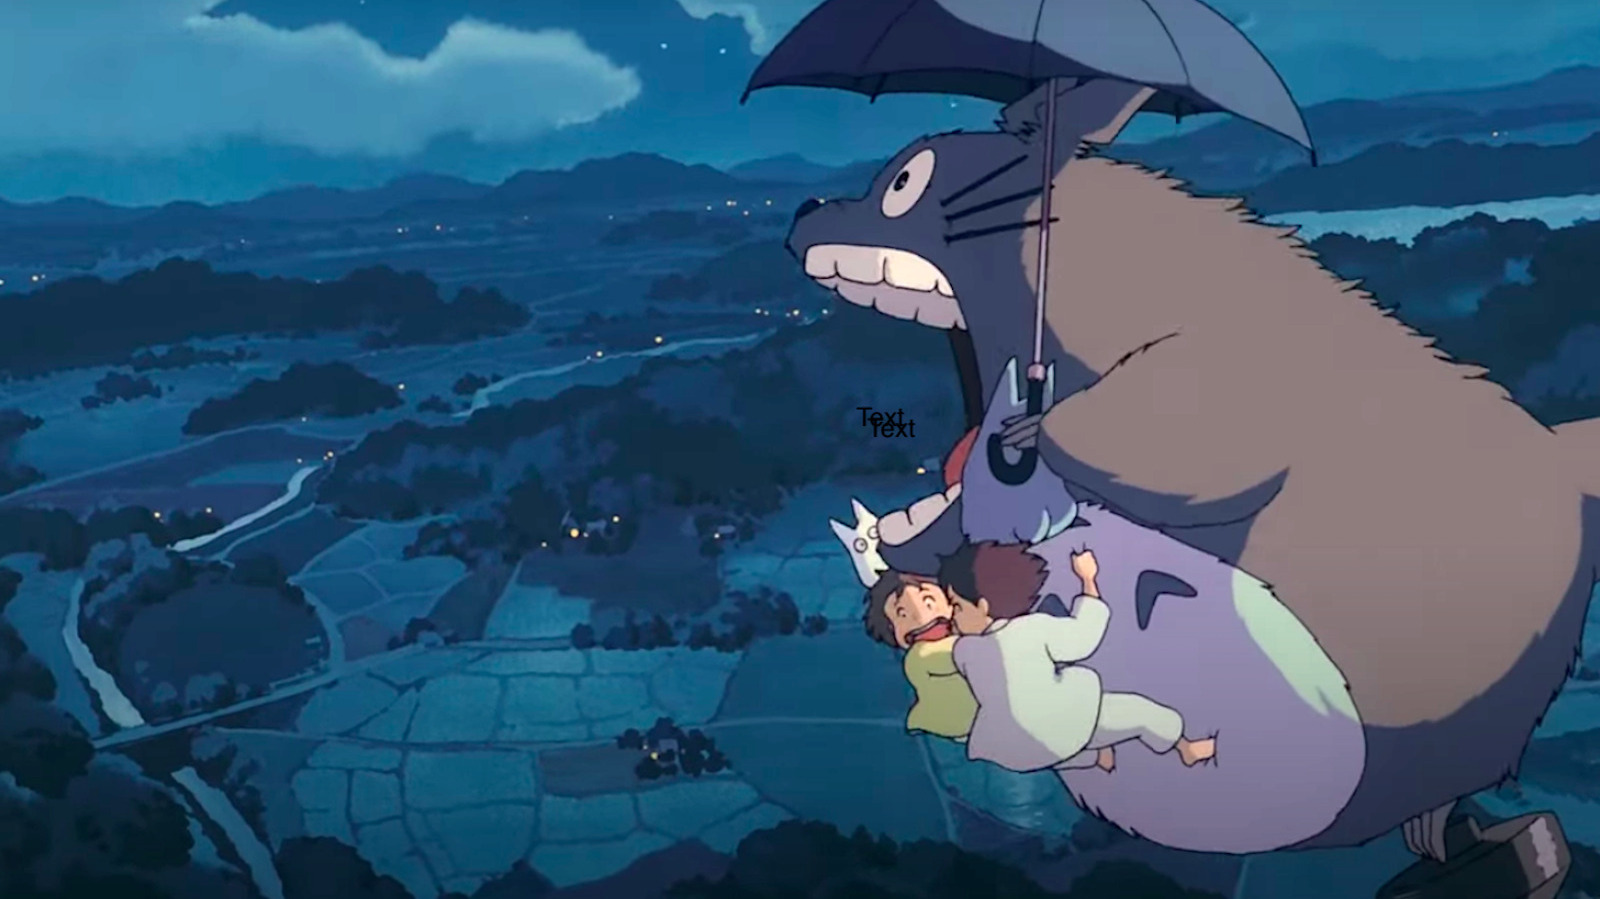 Movie Review: Hayao Miyazaki: My Neighbor Totoro by techgnotic on